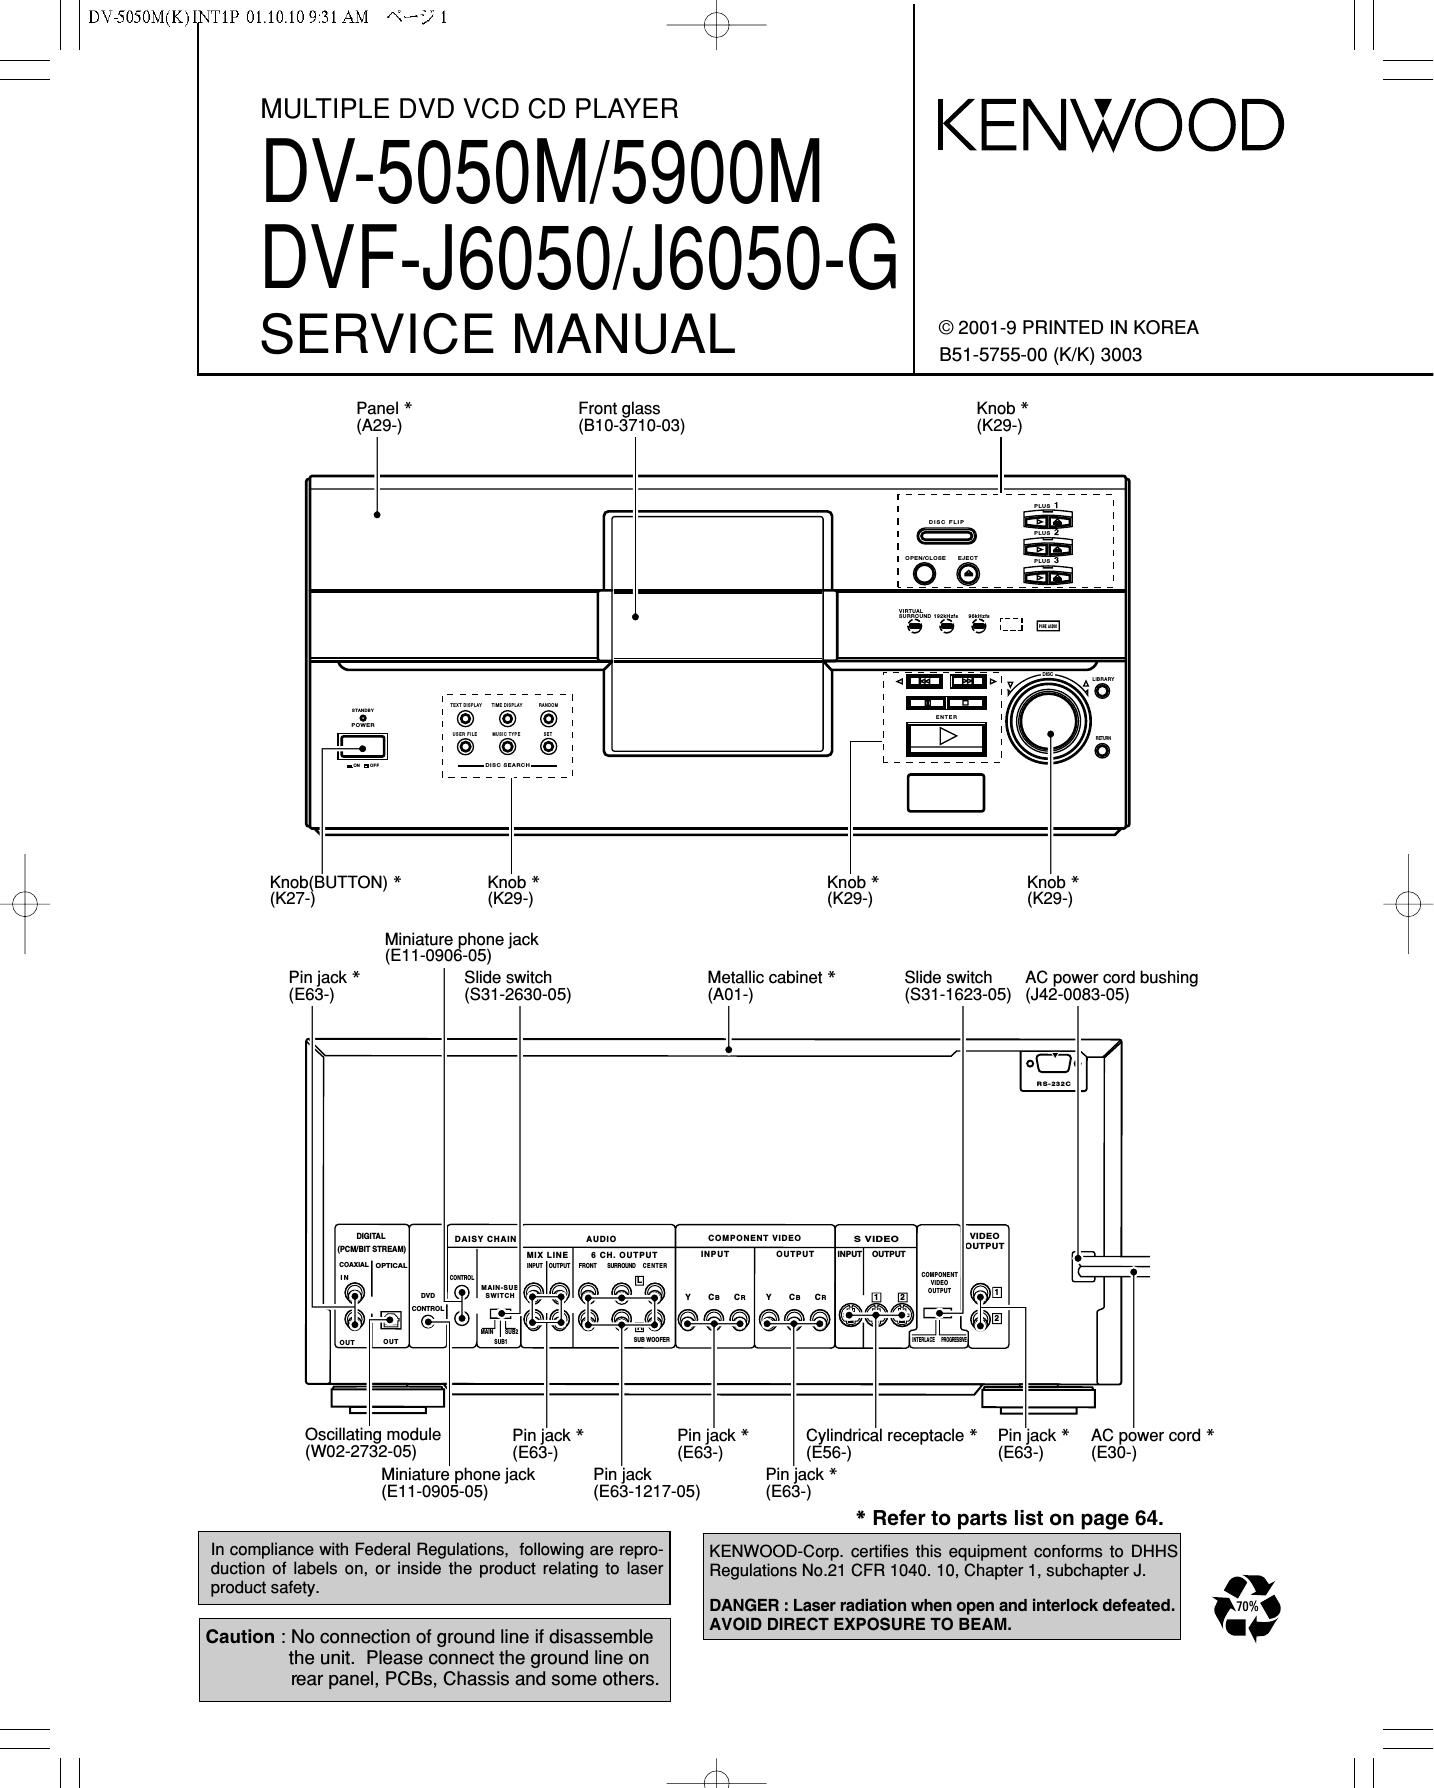 Kenwood DVFJ 6050 Service Manual